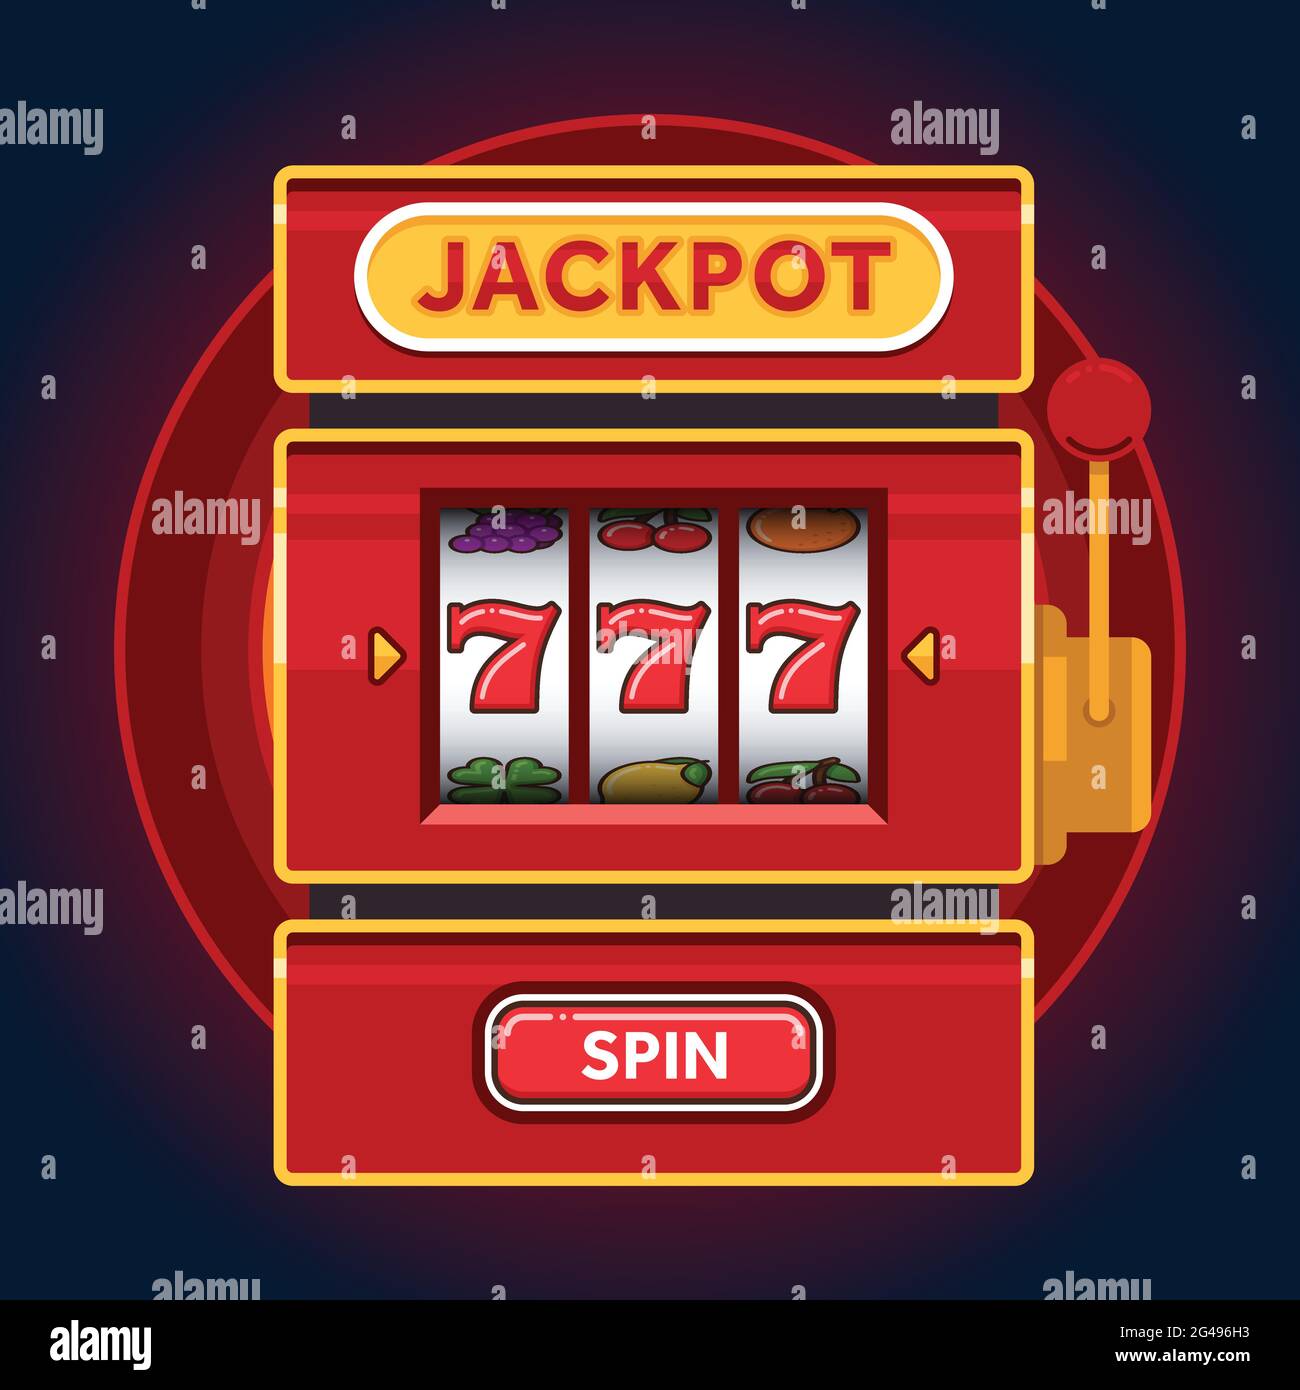 Juegos de Azar de Jackpot